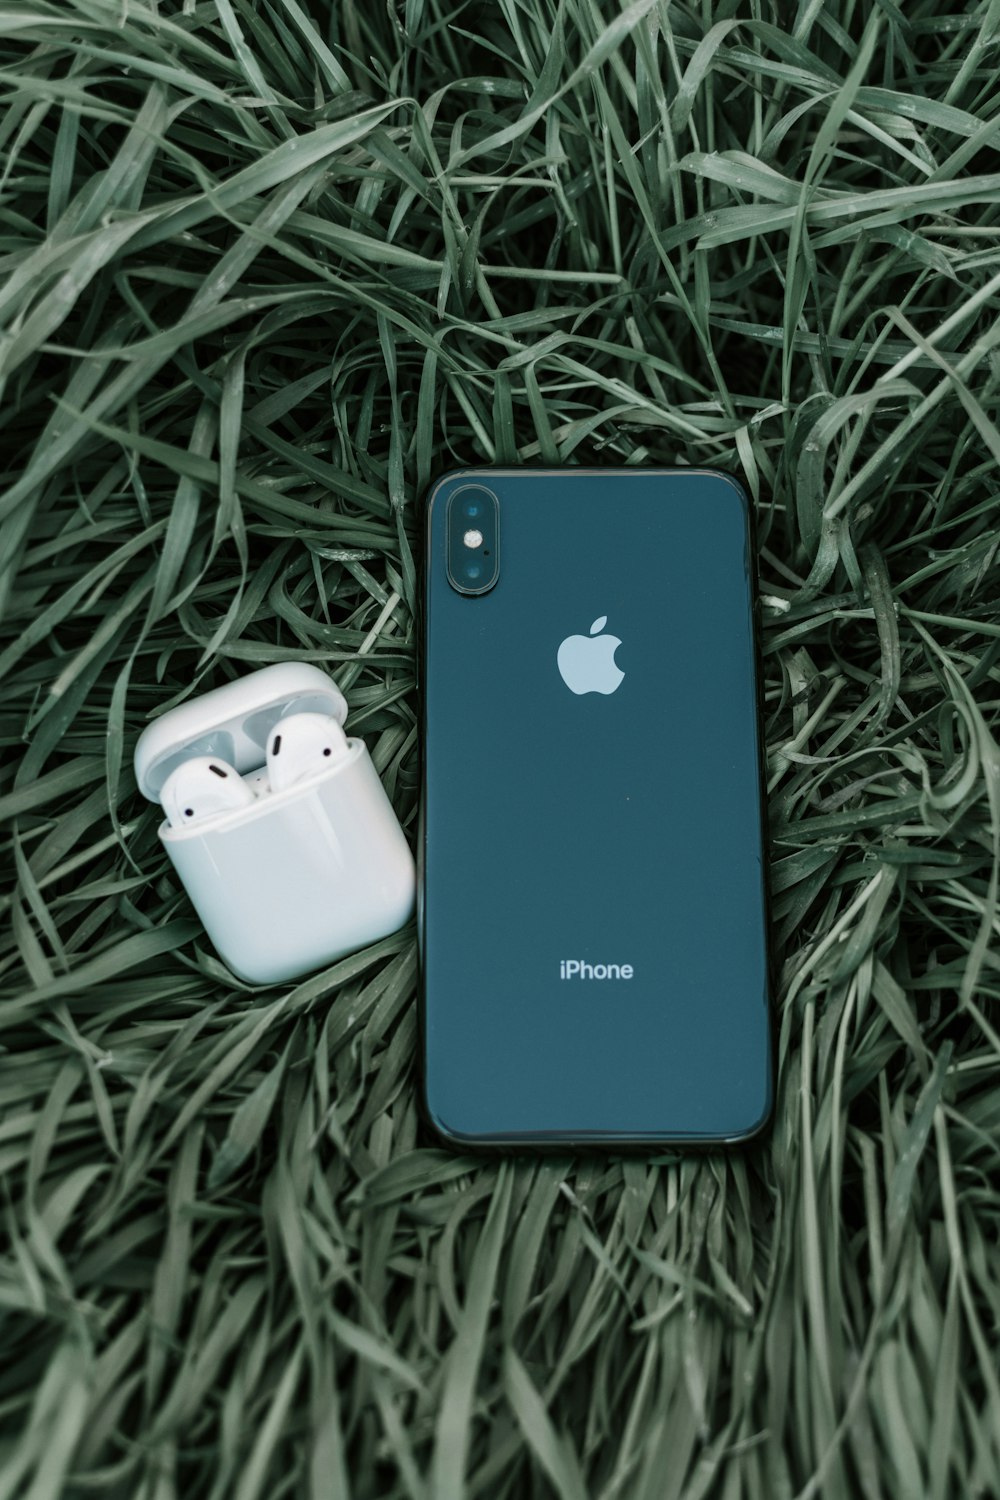 blue iphone 5 c on green grass